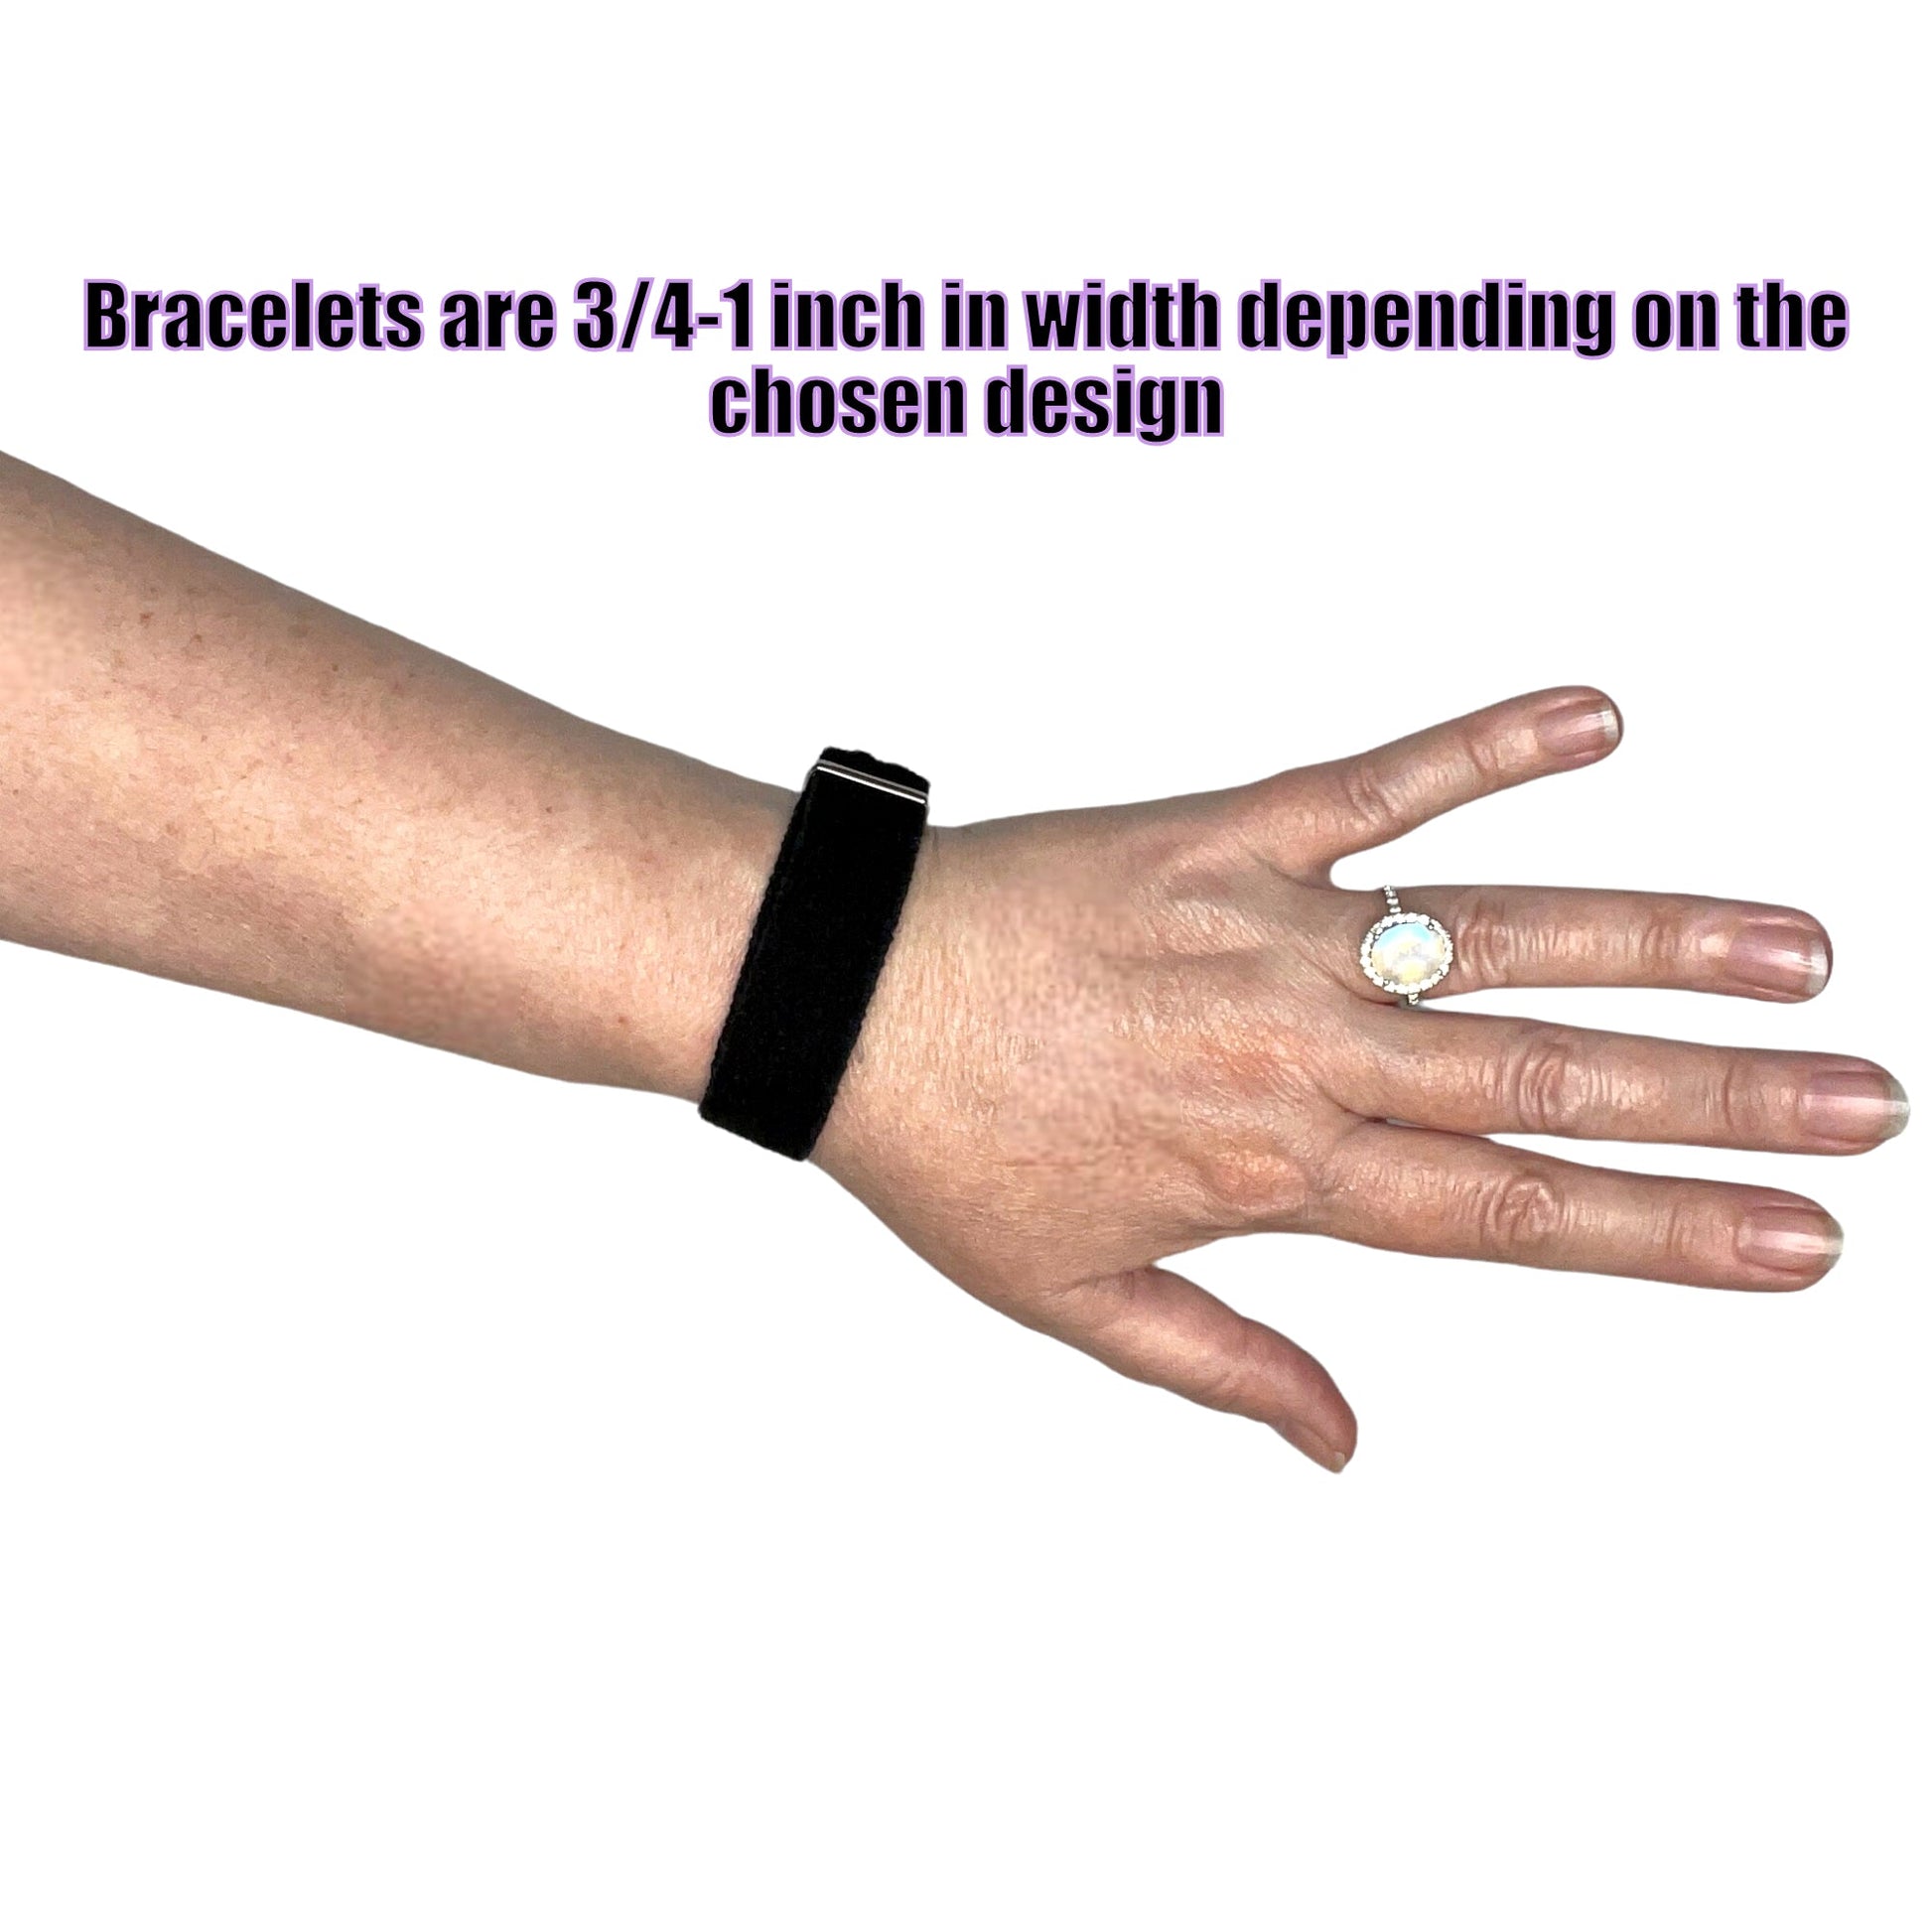 Stylish Anti-Nausea Motion Sickness Bracelets-Adjustable Calming Acupressure Band-Stress Relief-Pair - Acupressure Bracelets